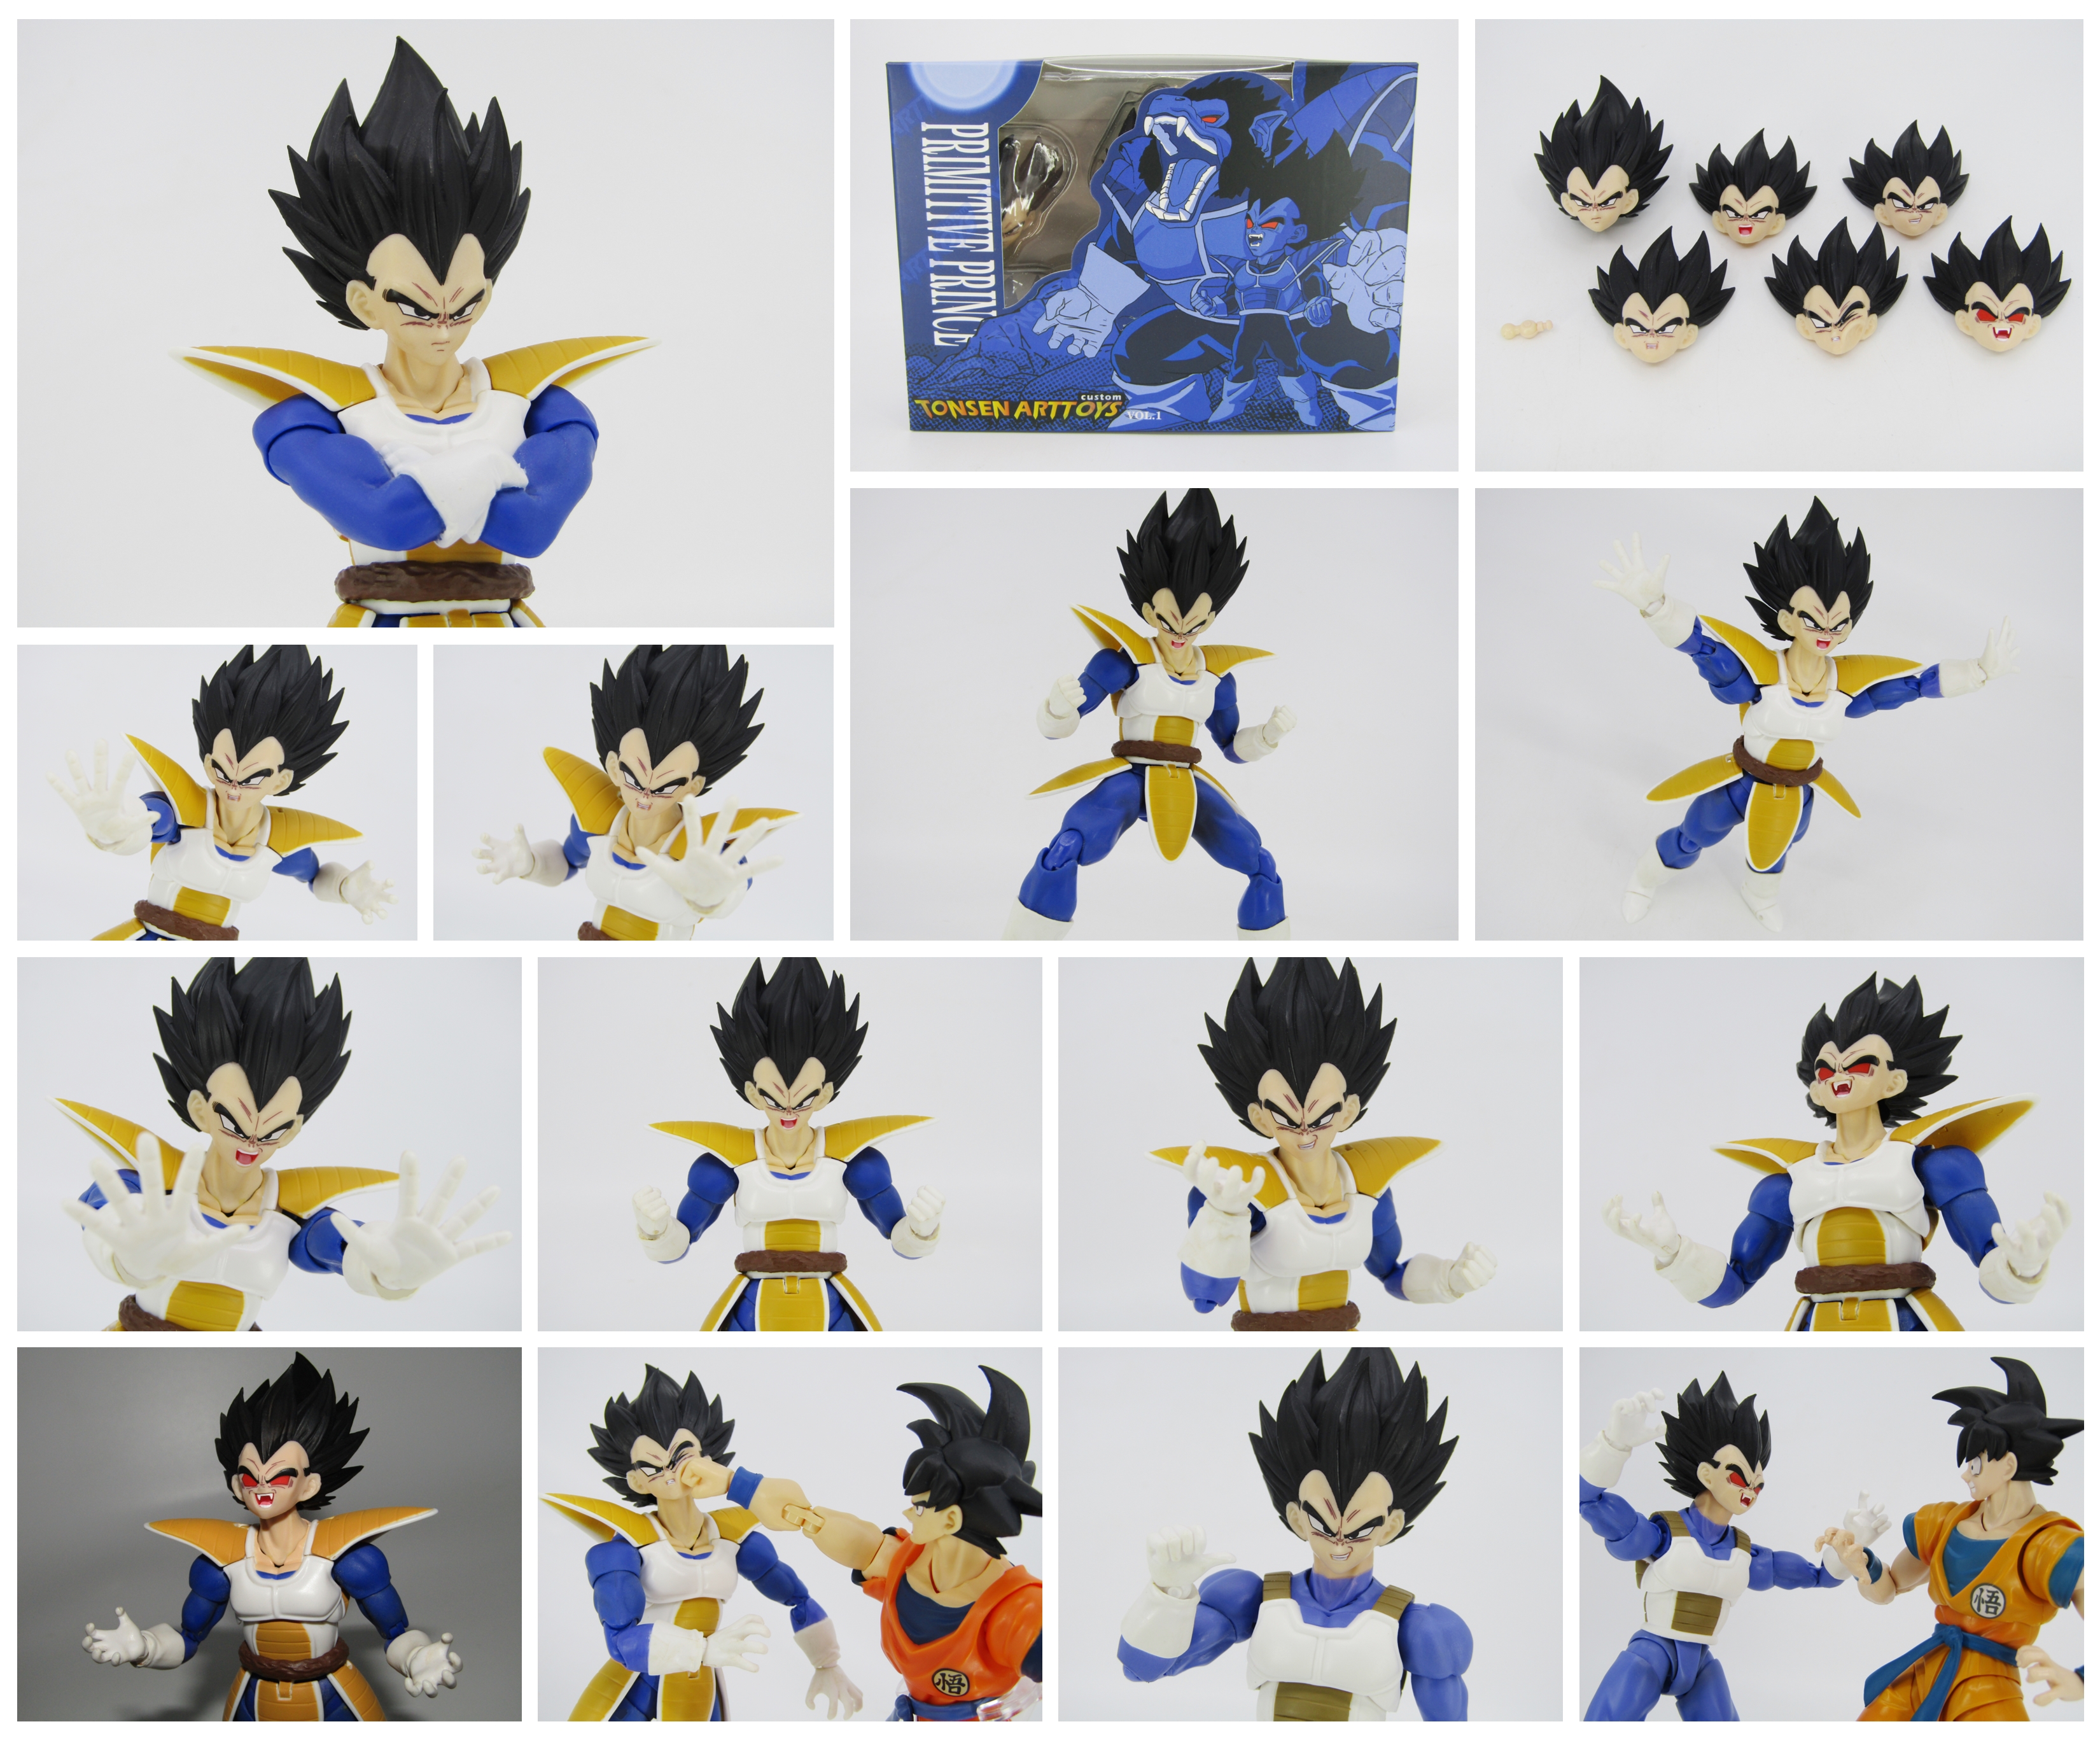 Official SSj2 Goku x Tonsen Arttoys Majin Vegeta The Vegeta head does